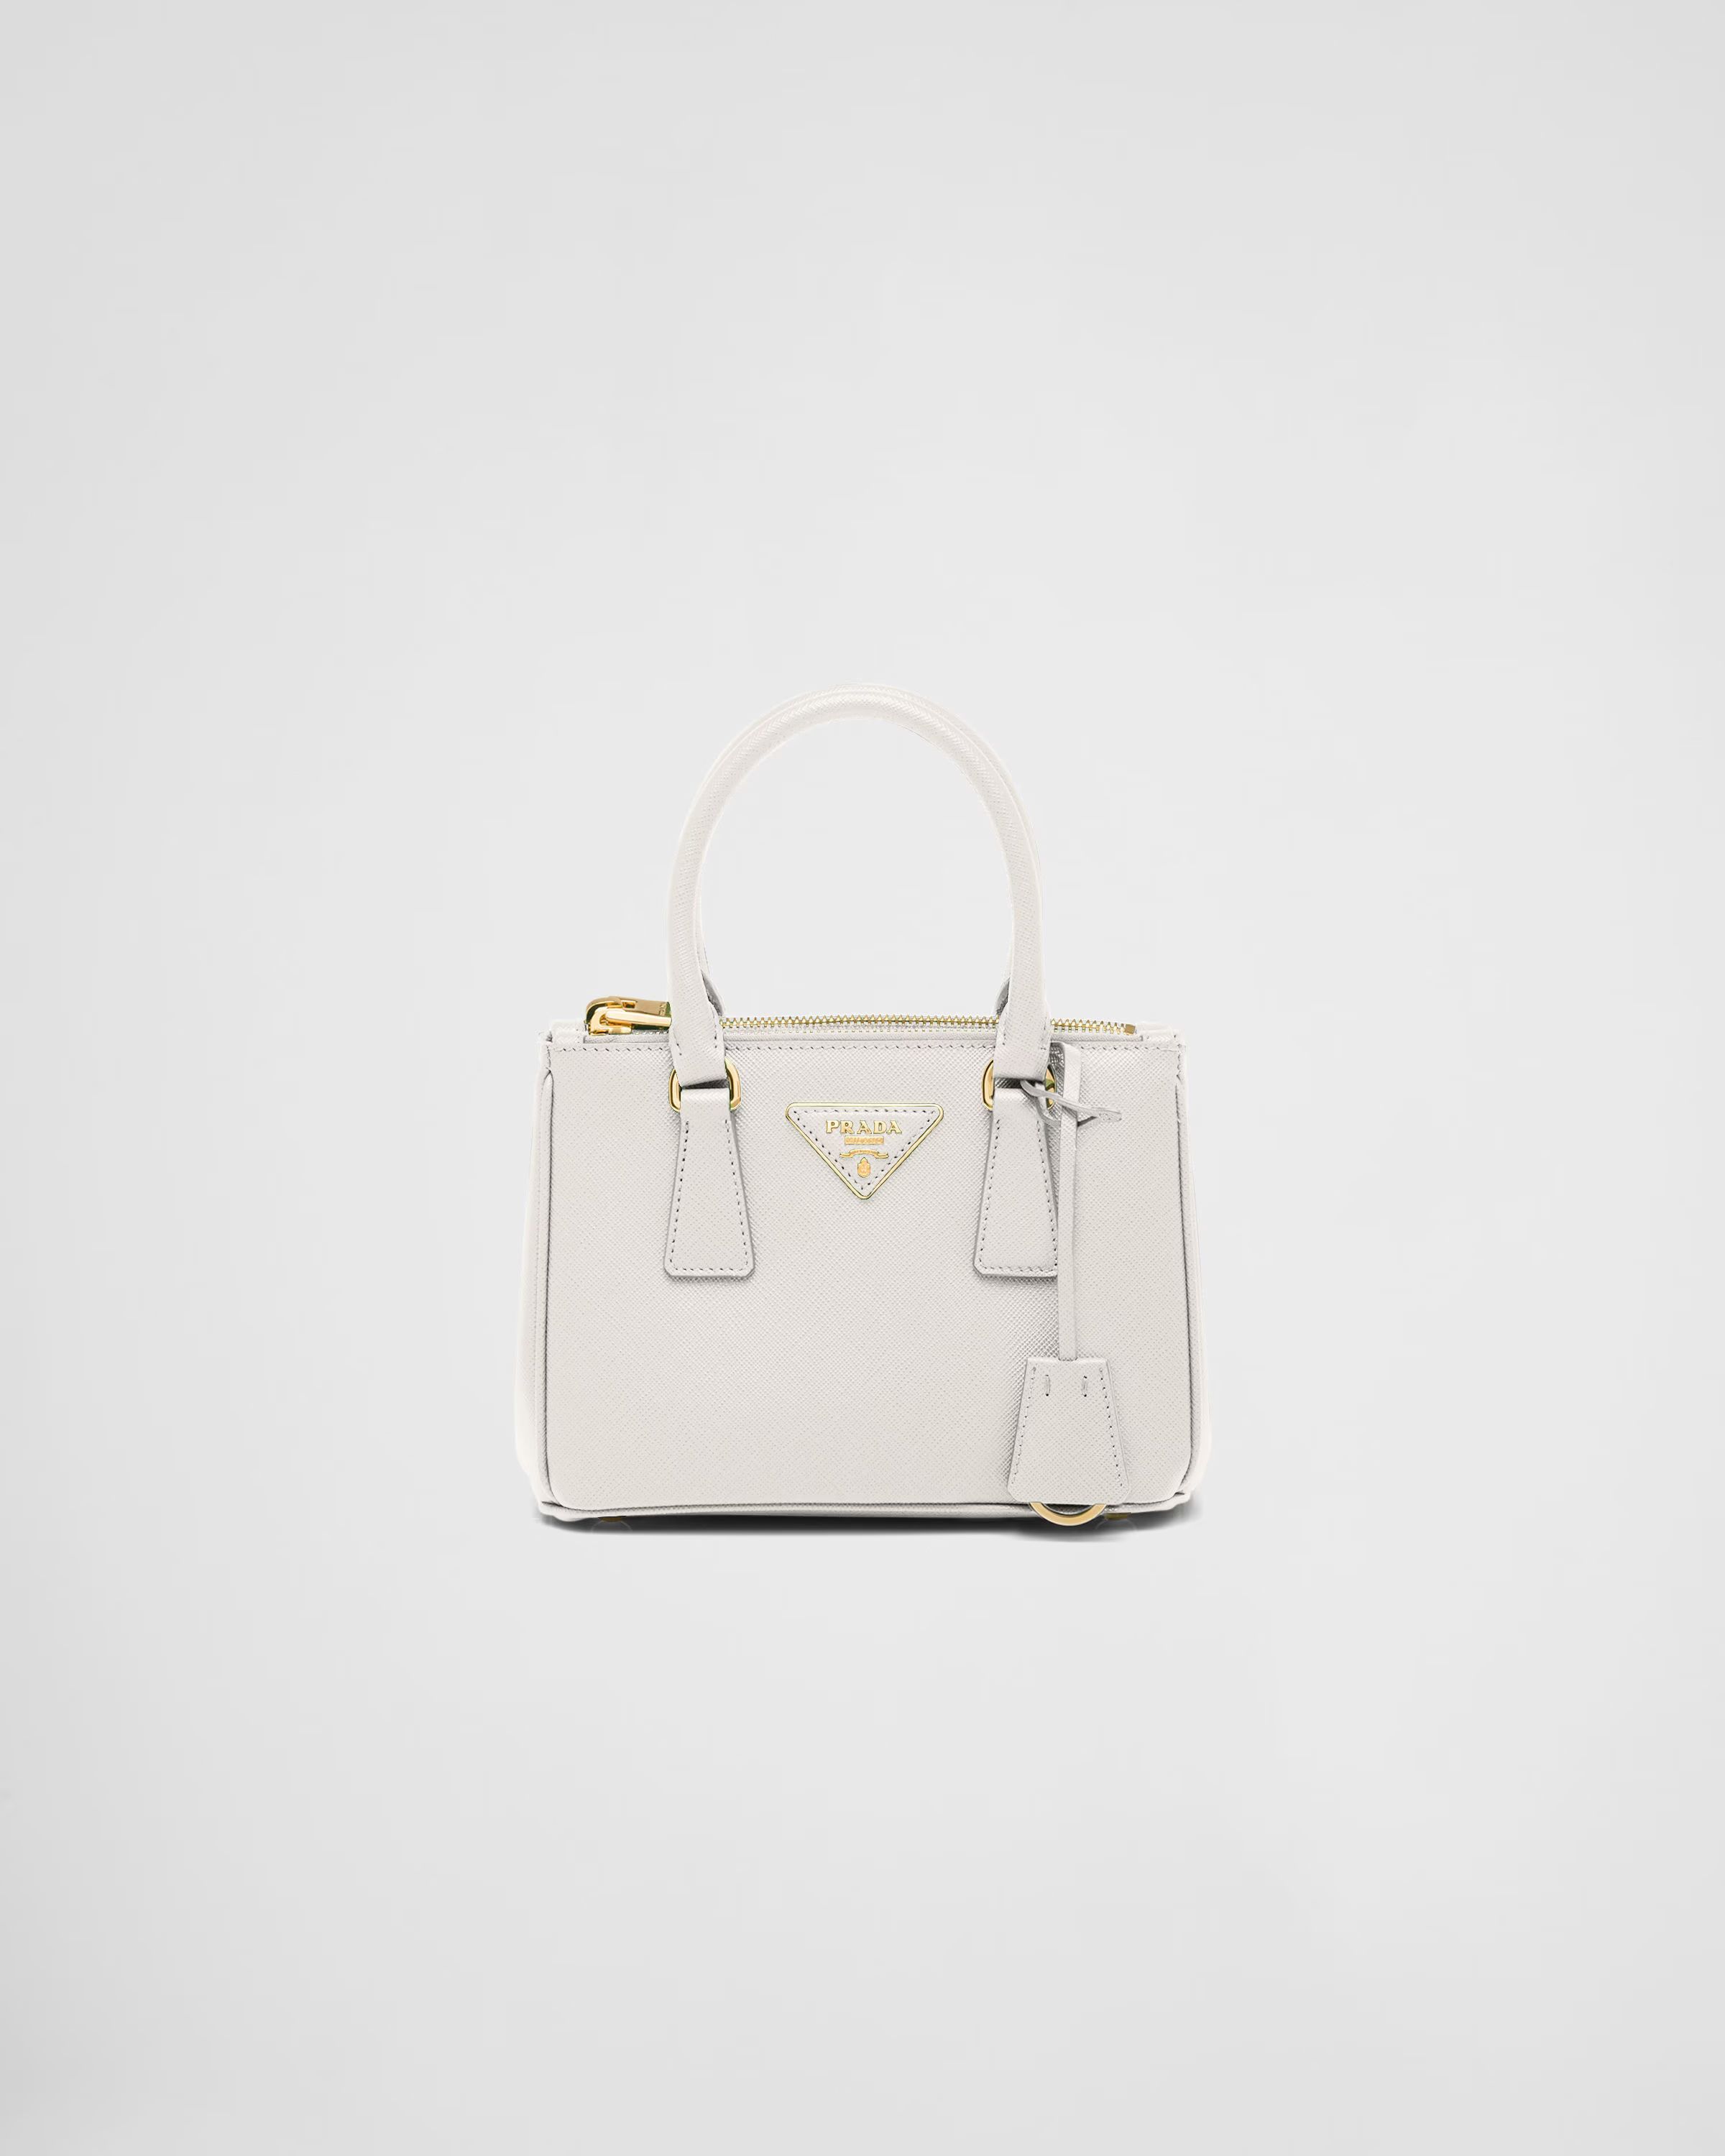 Prada Galleria Saffiano leather mini-bag | Prada Spa US